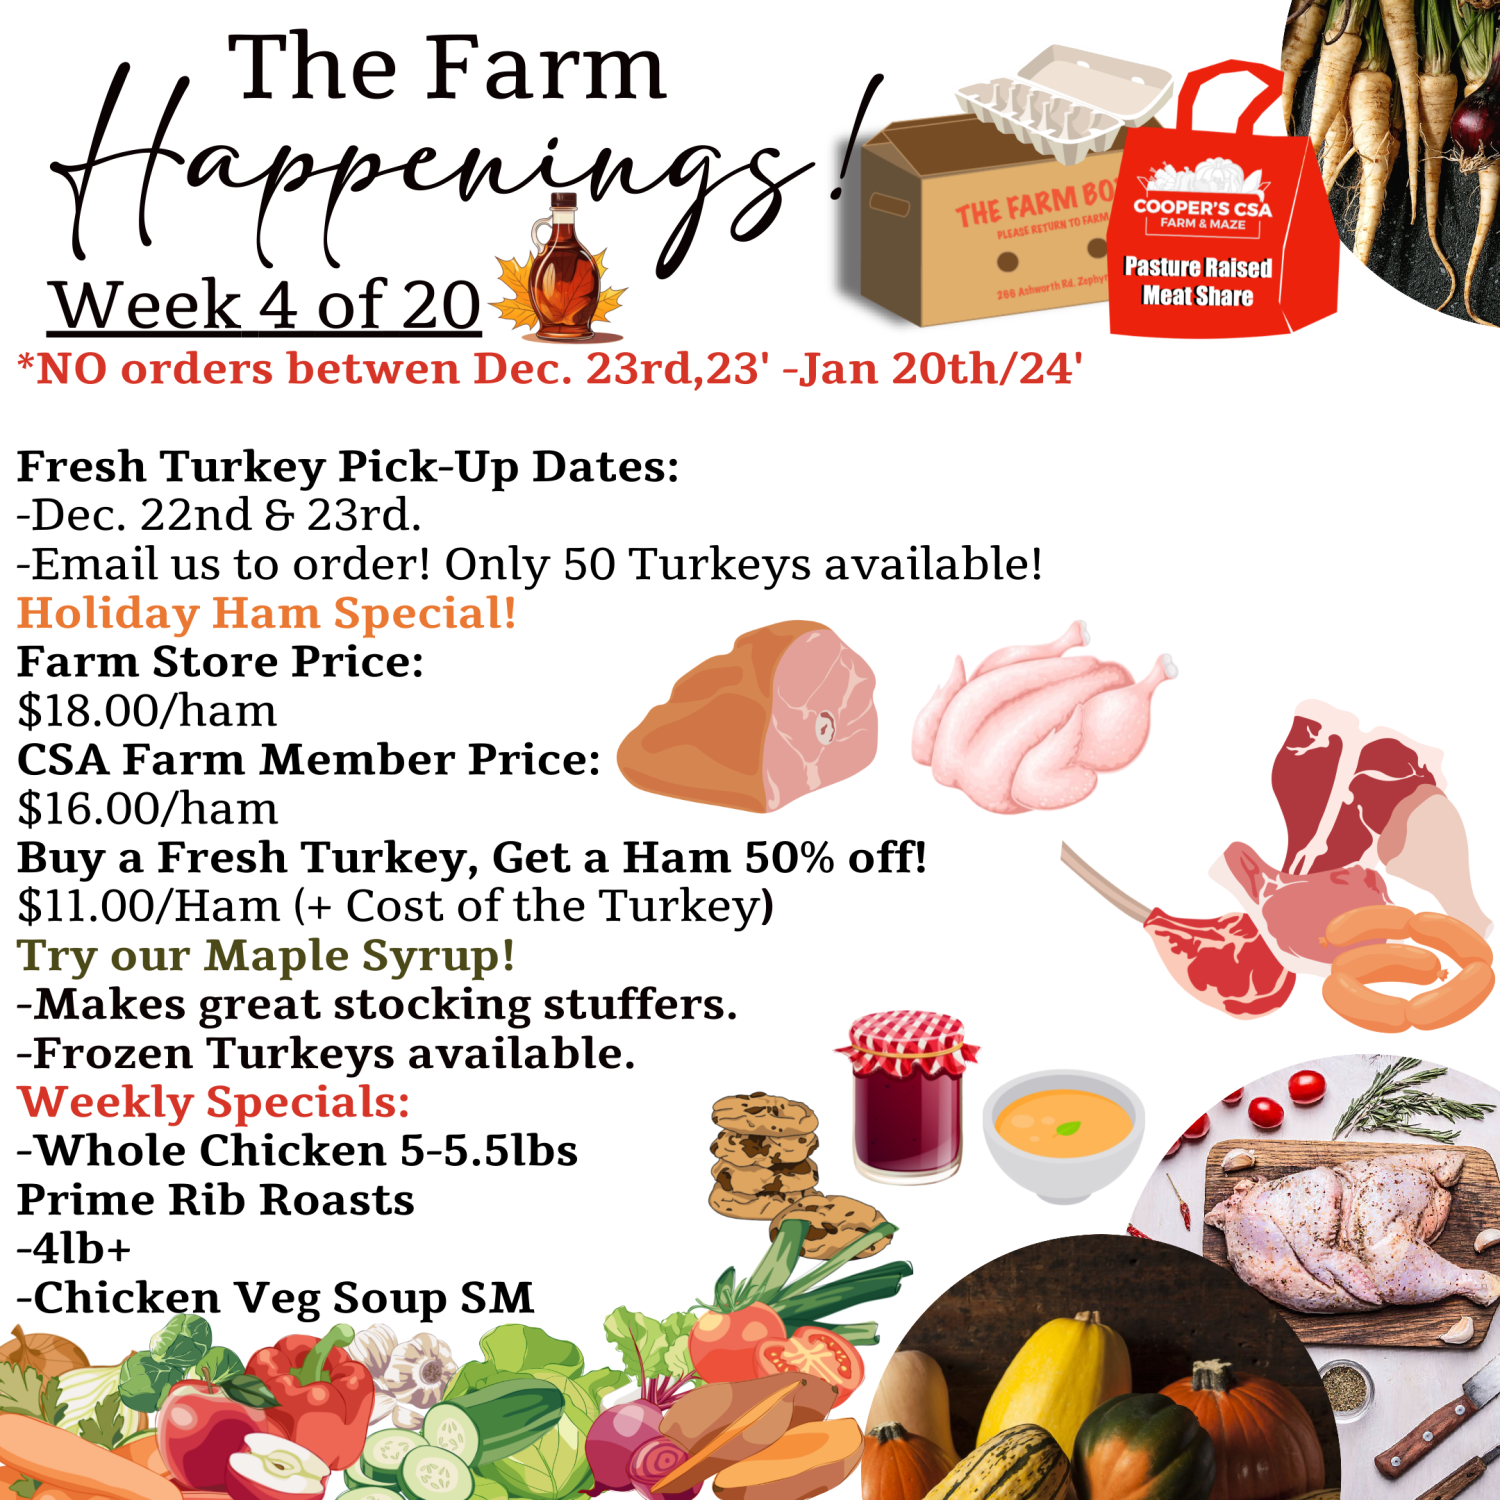 Previous Happening: "The Farm Box"-Coopers CSA Farm Farm Happenings Dec. 5-9th